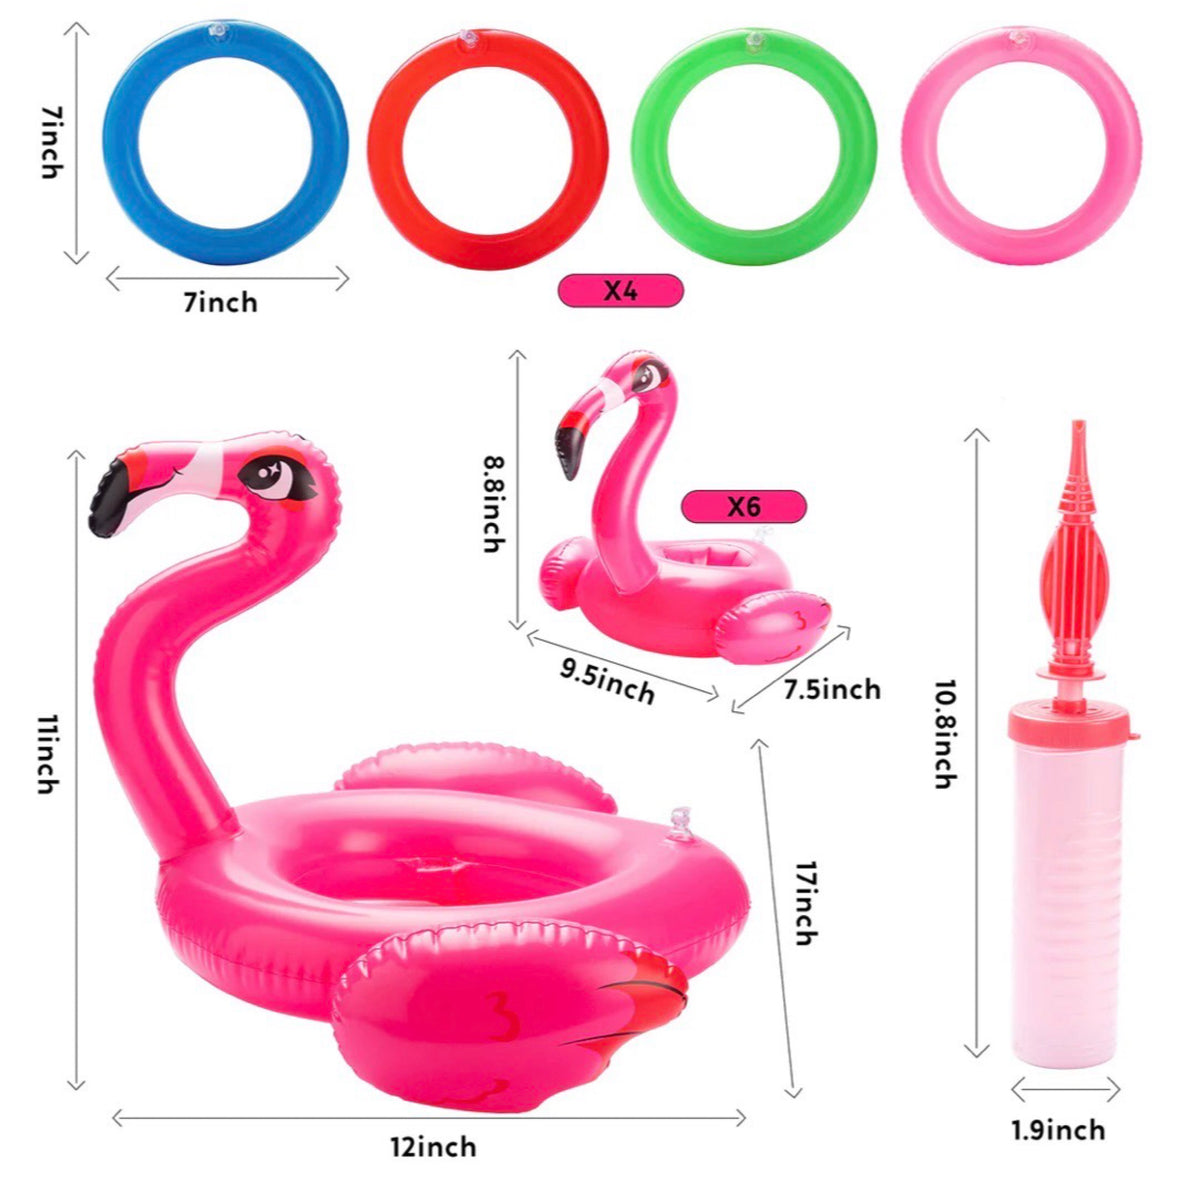 12pc Joyin Inflatable Flamingo Ring Toss Games With Hand Pump - Pool Time Fun